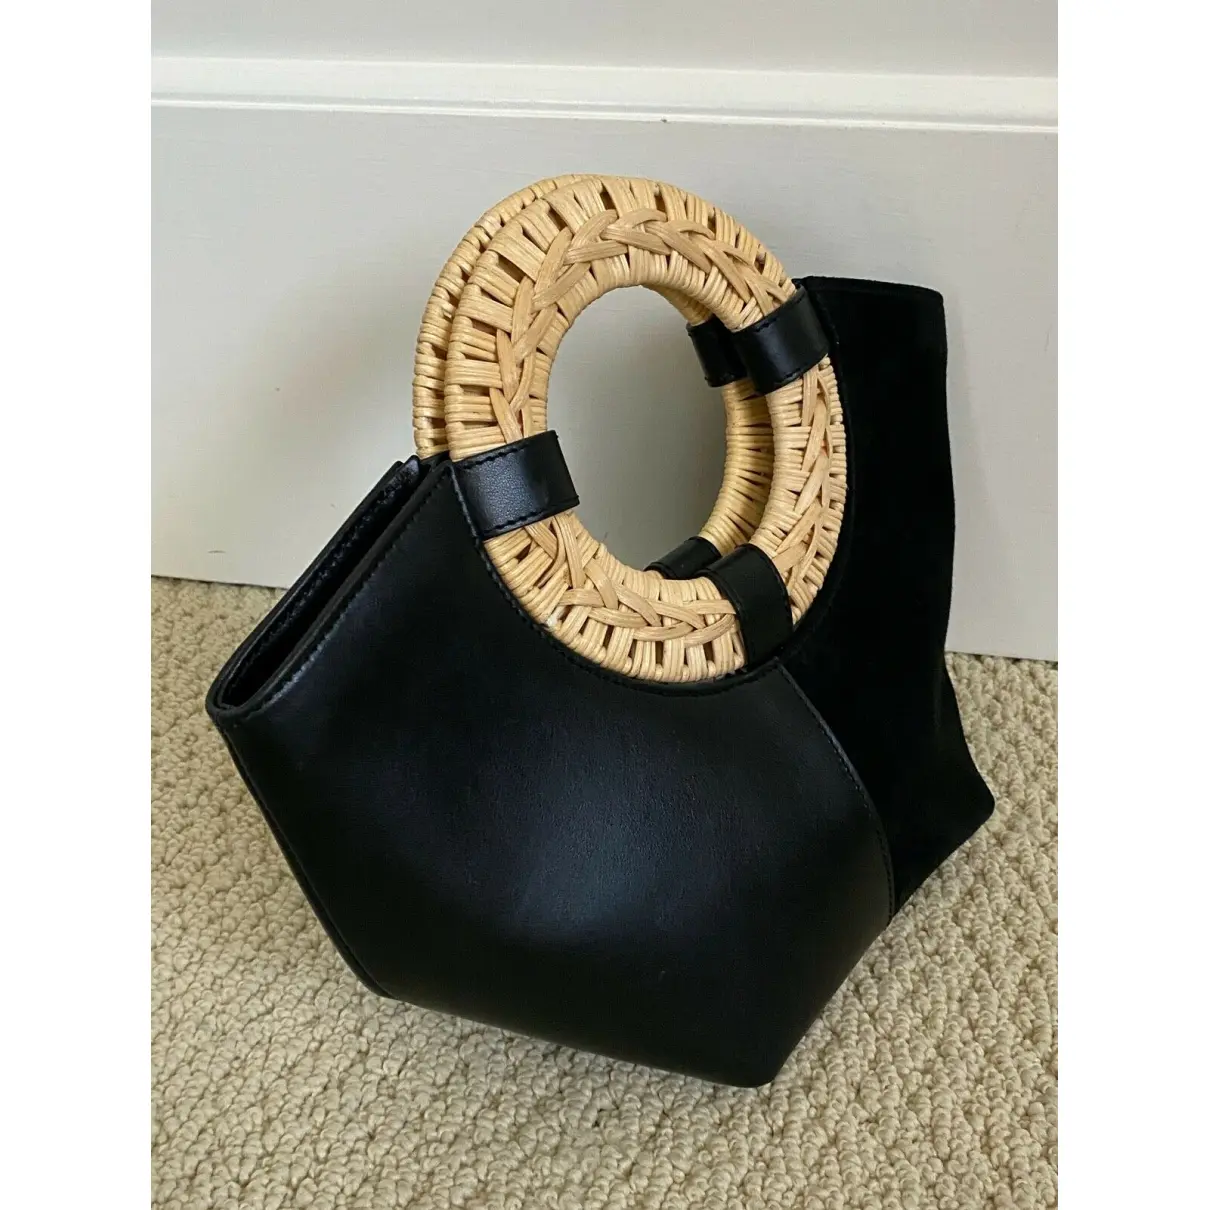 Leather handbag Ulla Johnson